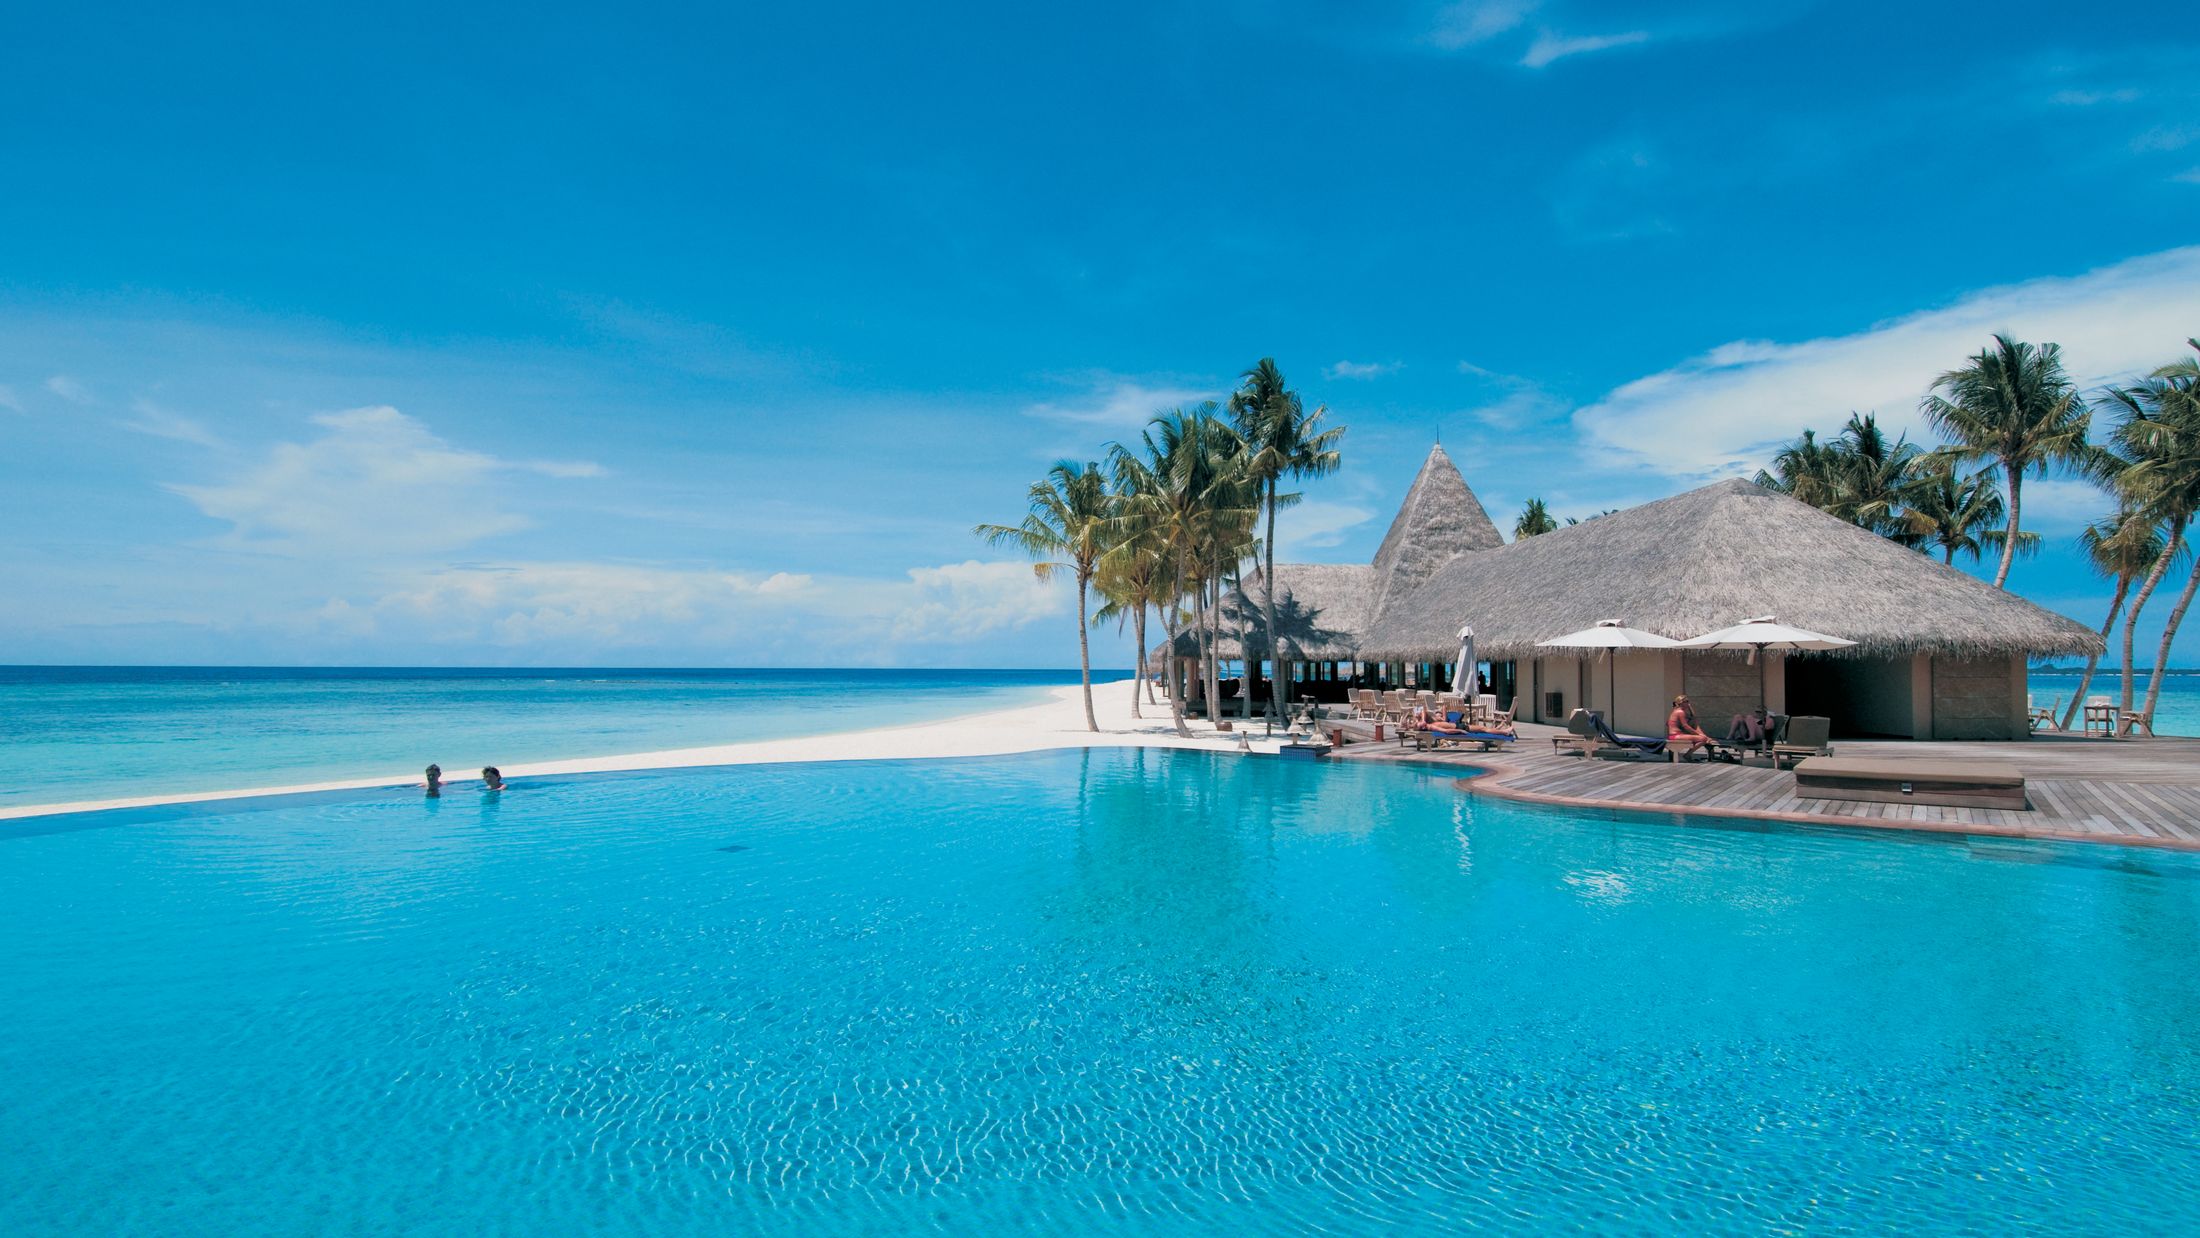 Swimming pool and bar area of Veligandu, Maldives.